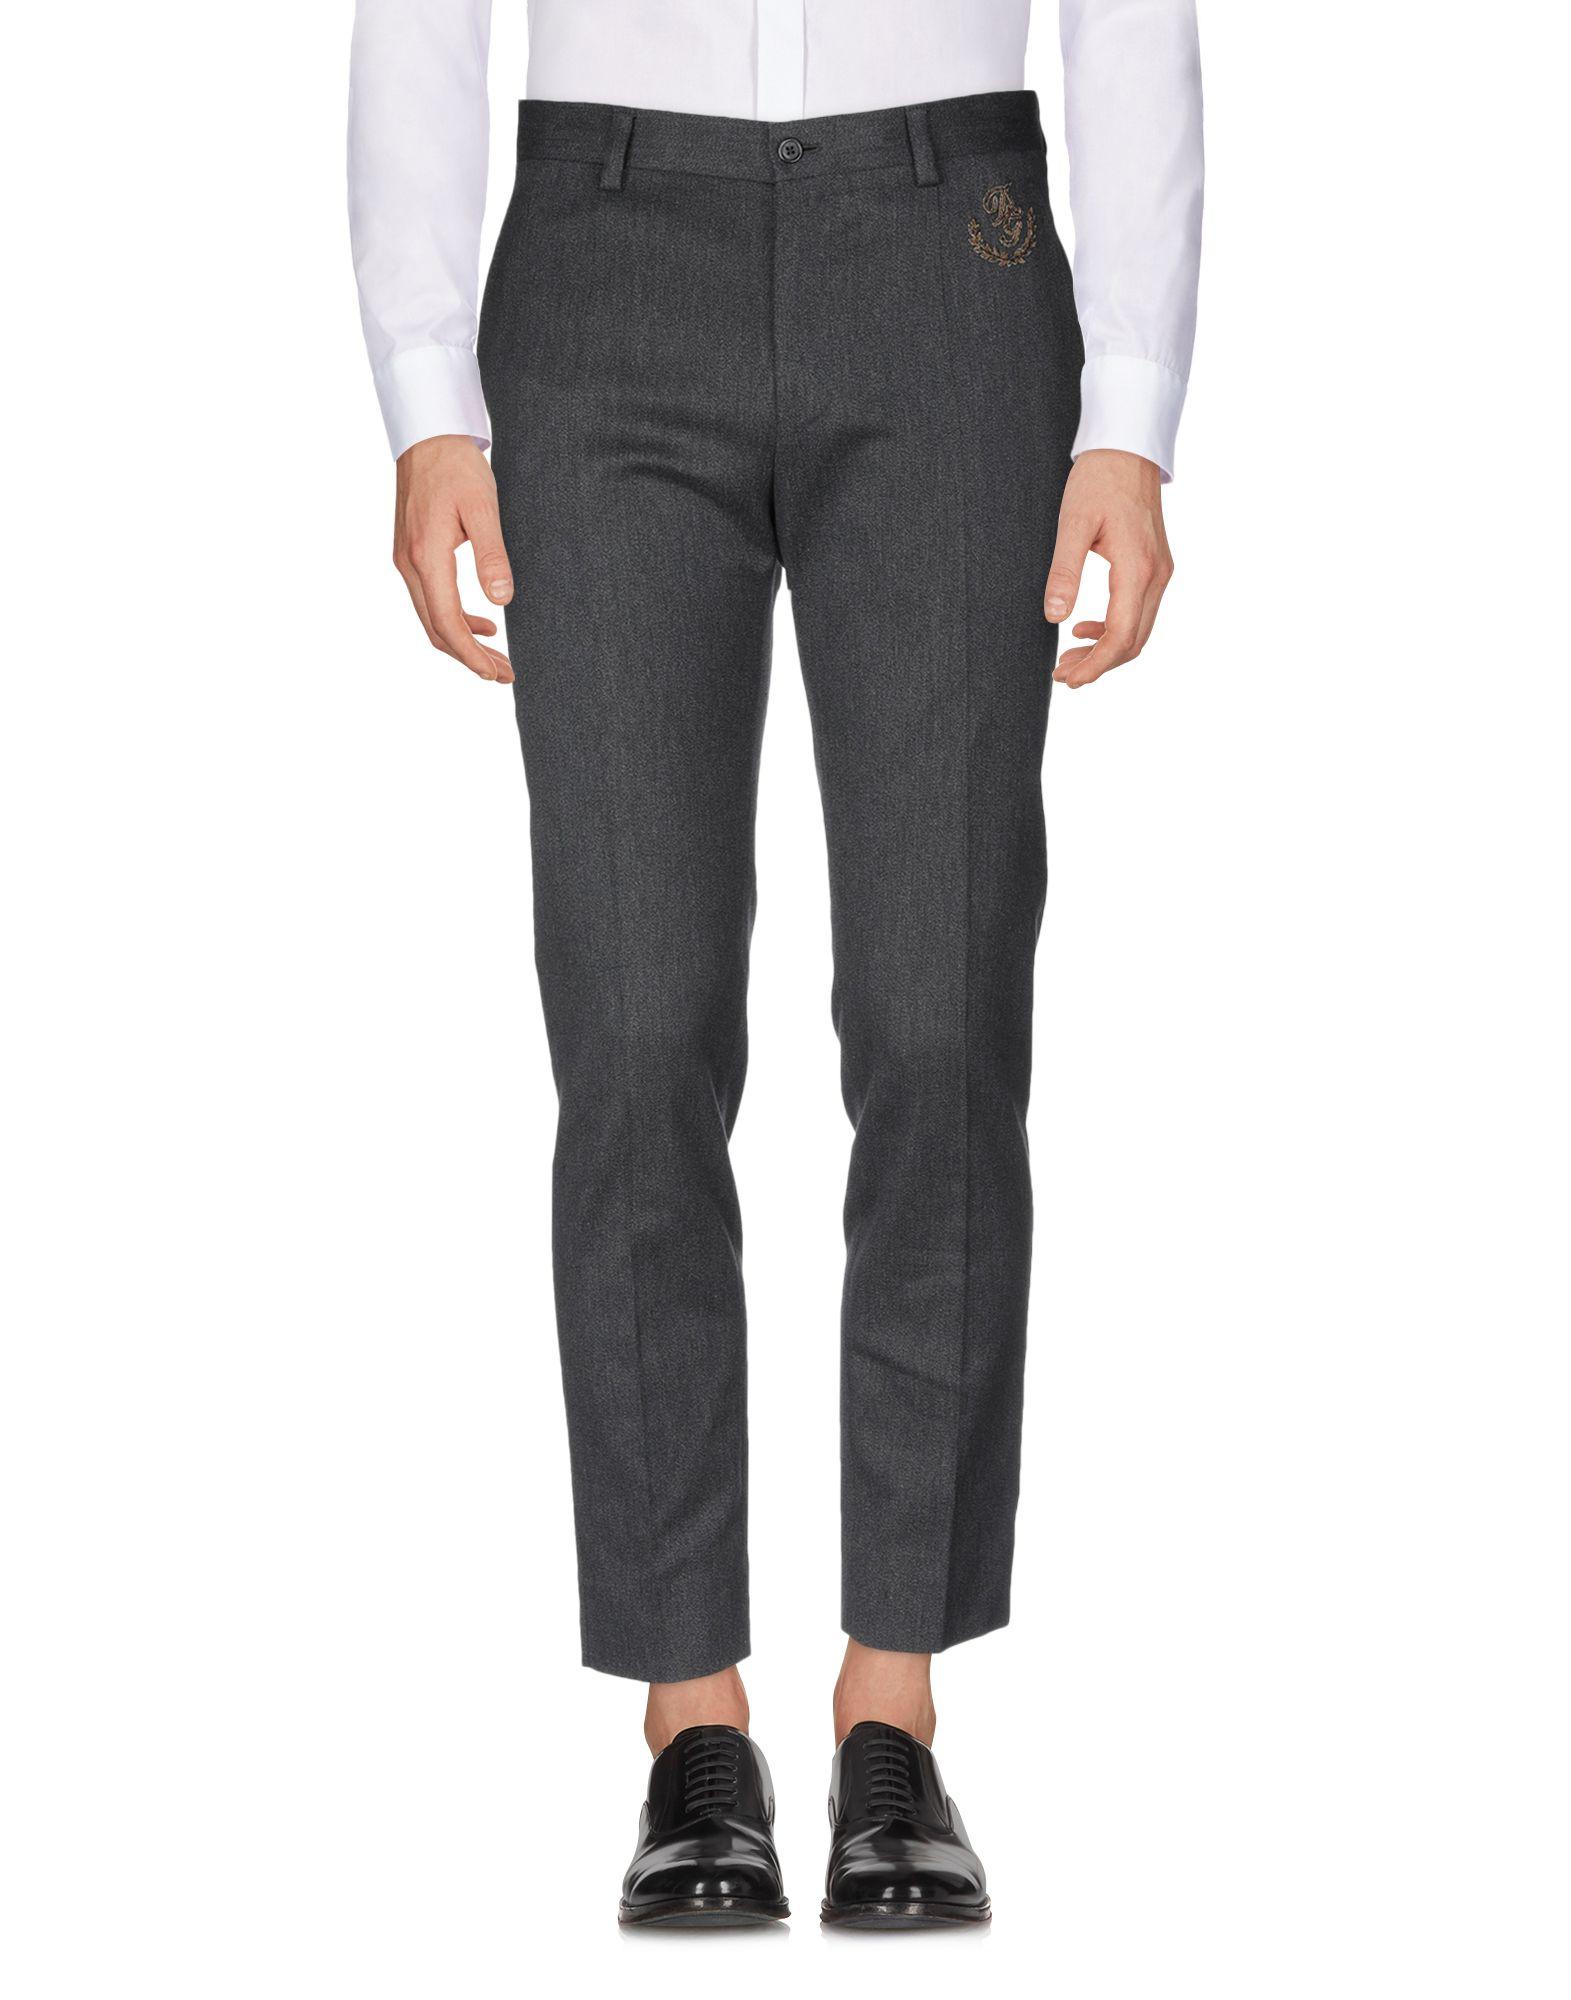 Dolce & Gabbana Casual Trouser in Gray for Men - Lyst